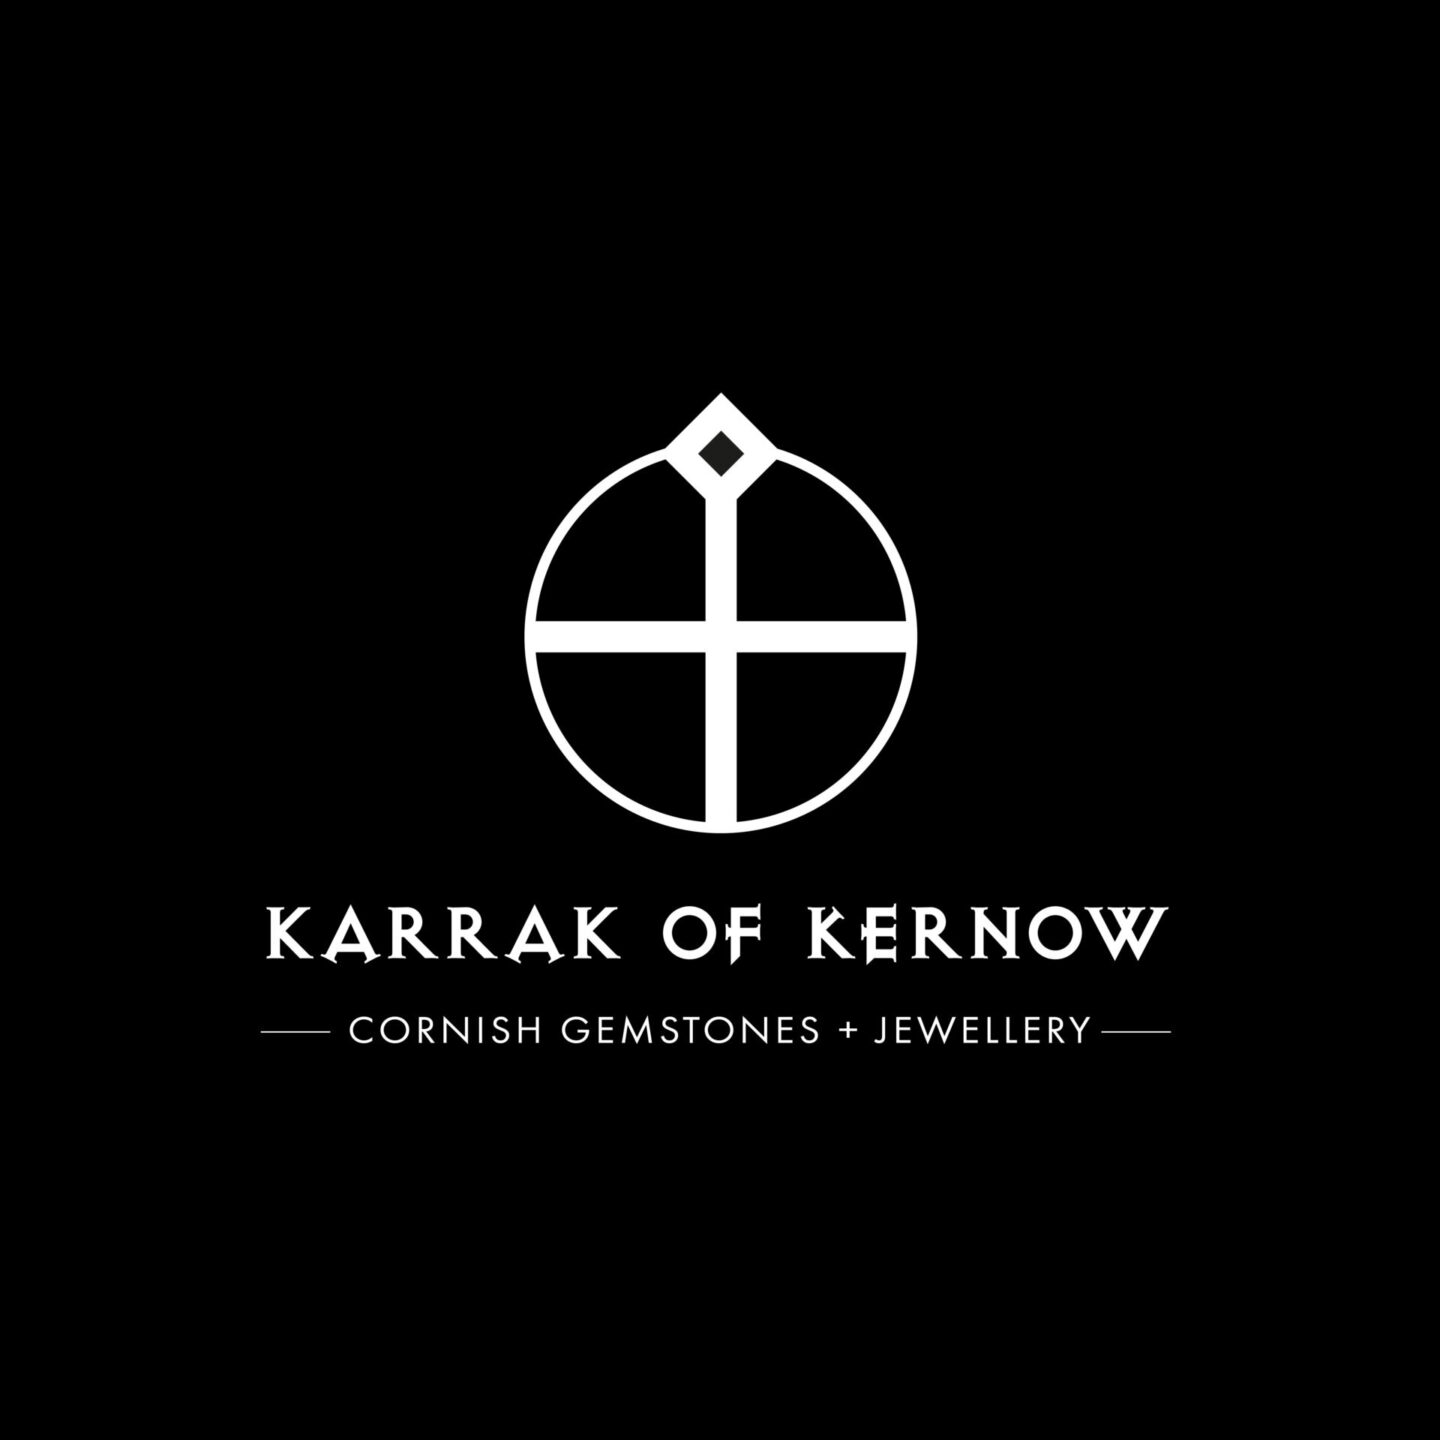 karrak of kernow logo cornish gemstones and jewellery